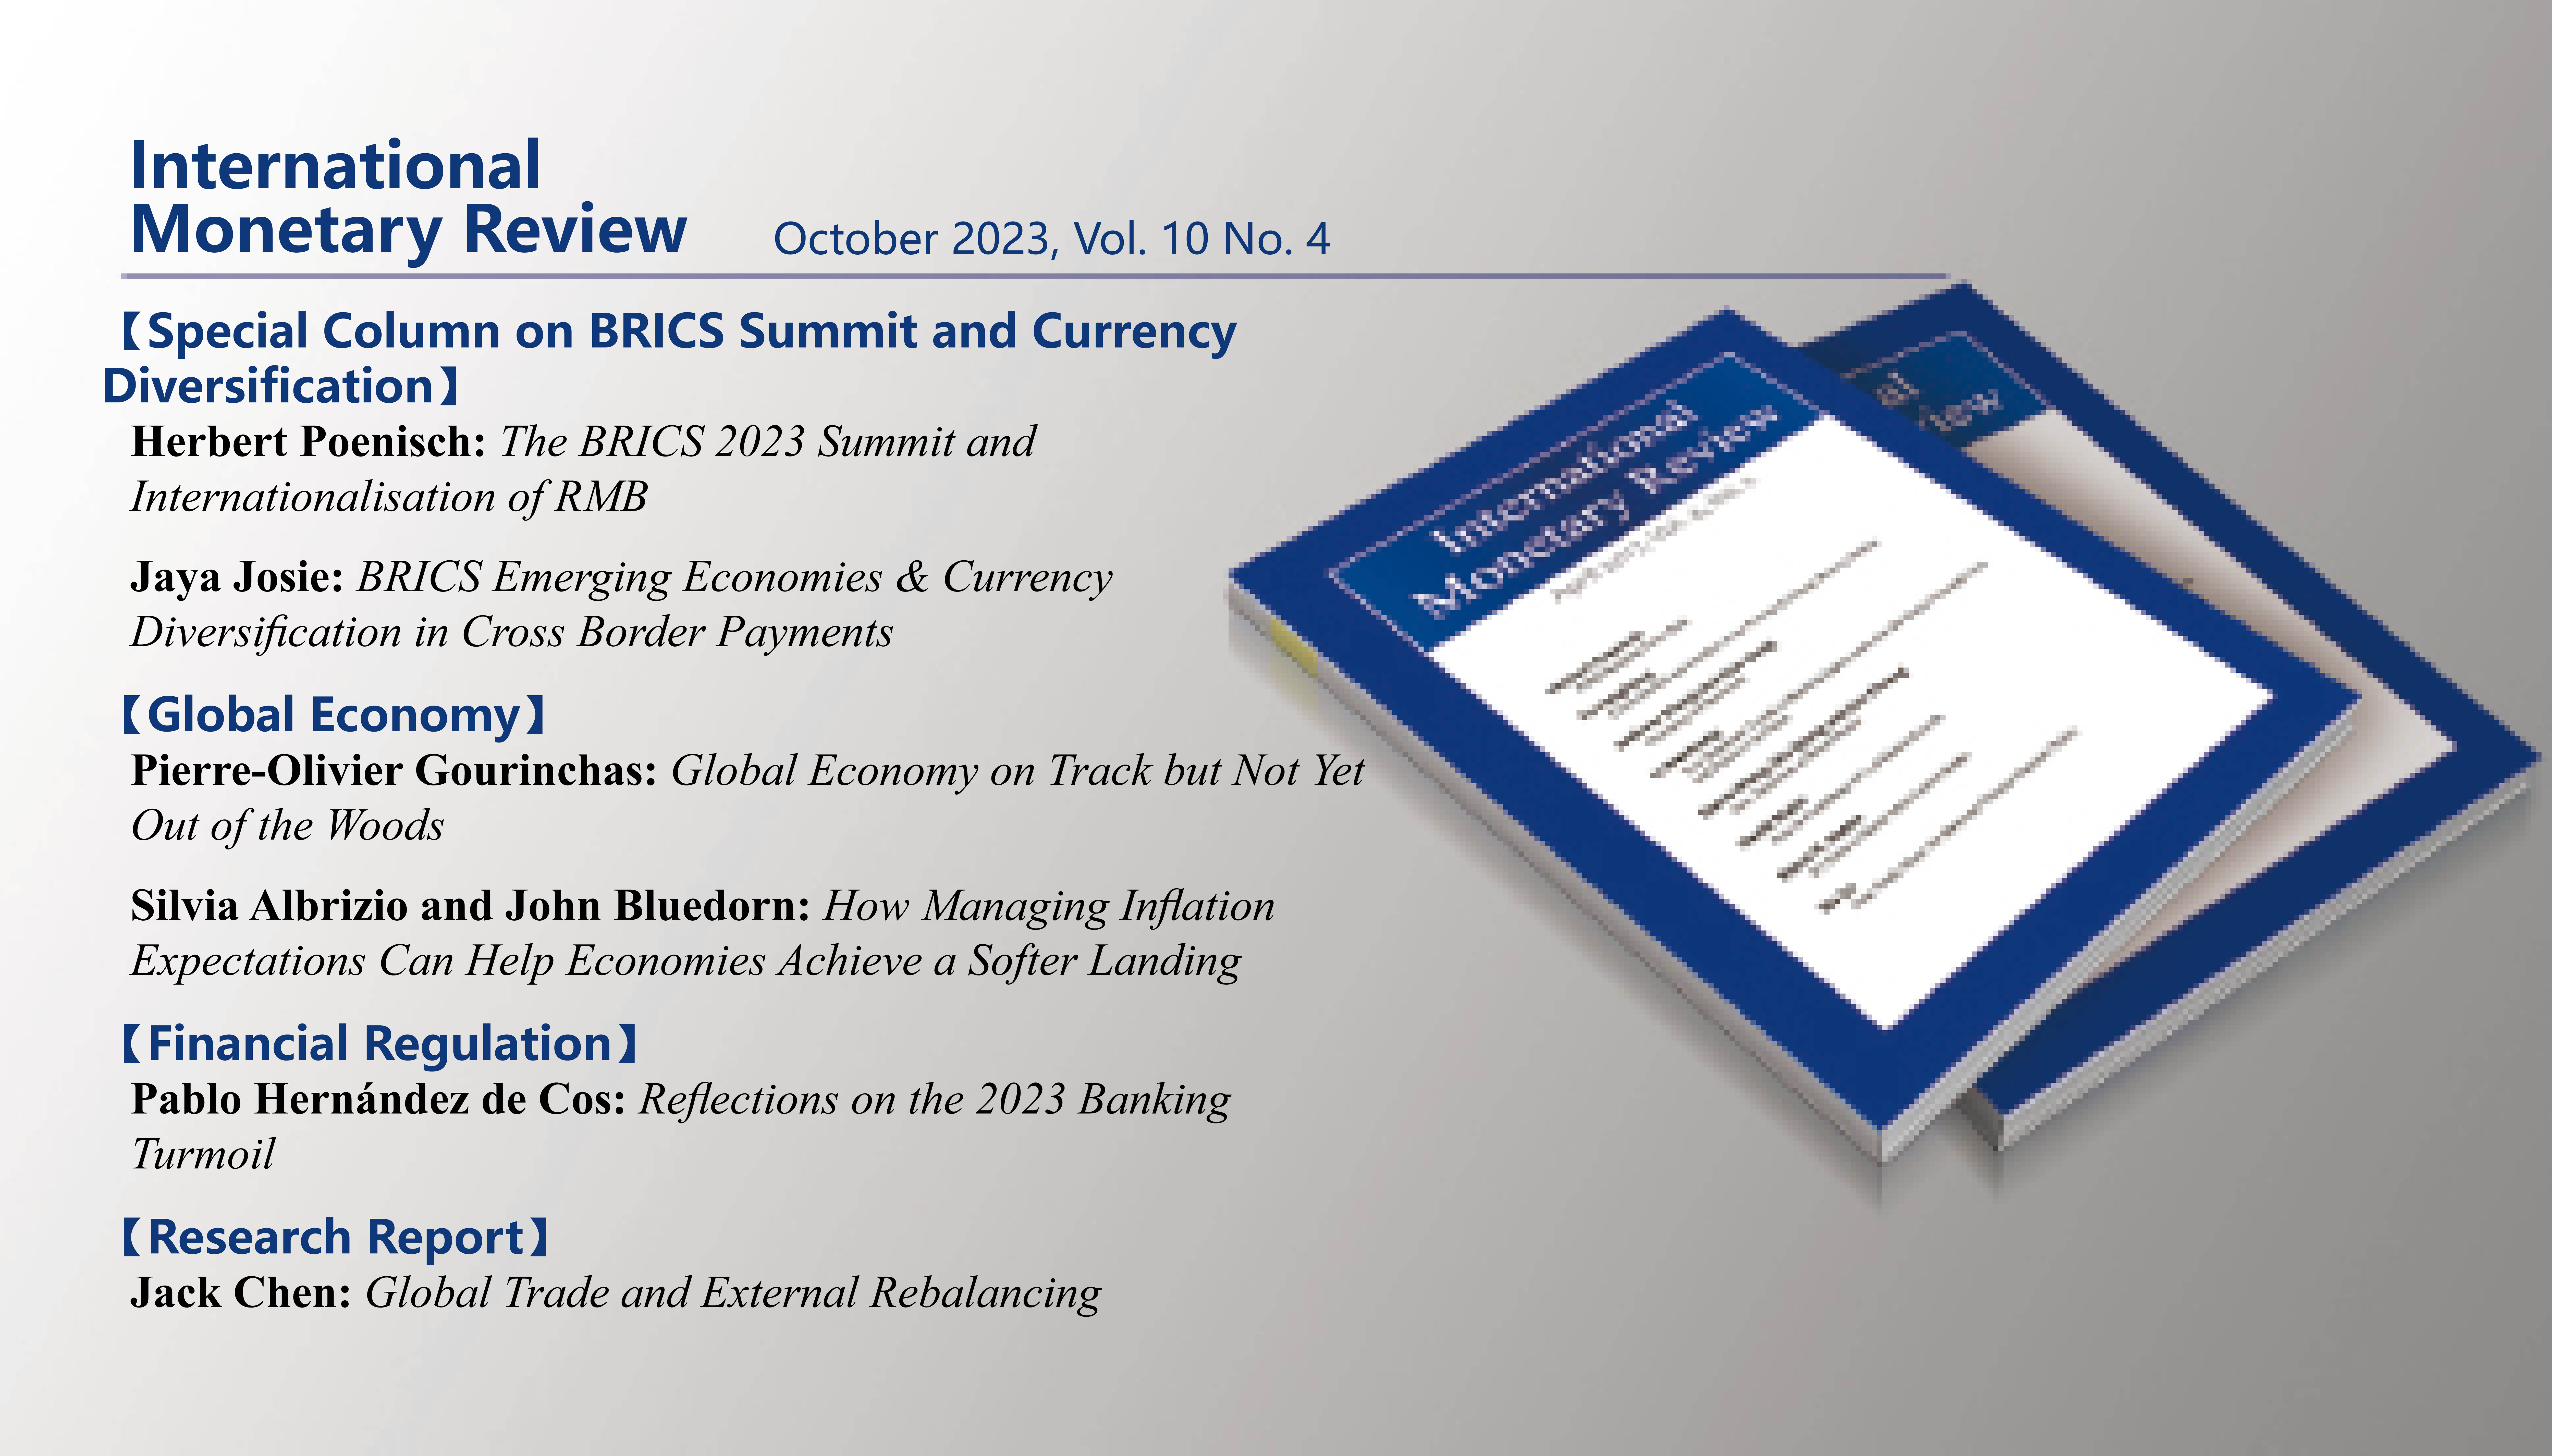 International Monetary Review, October 2023, Vol. 10 No. 4